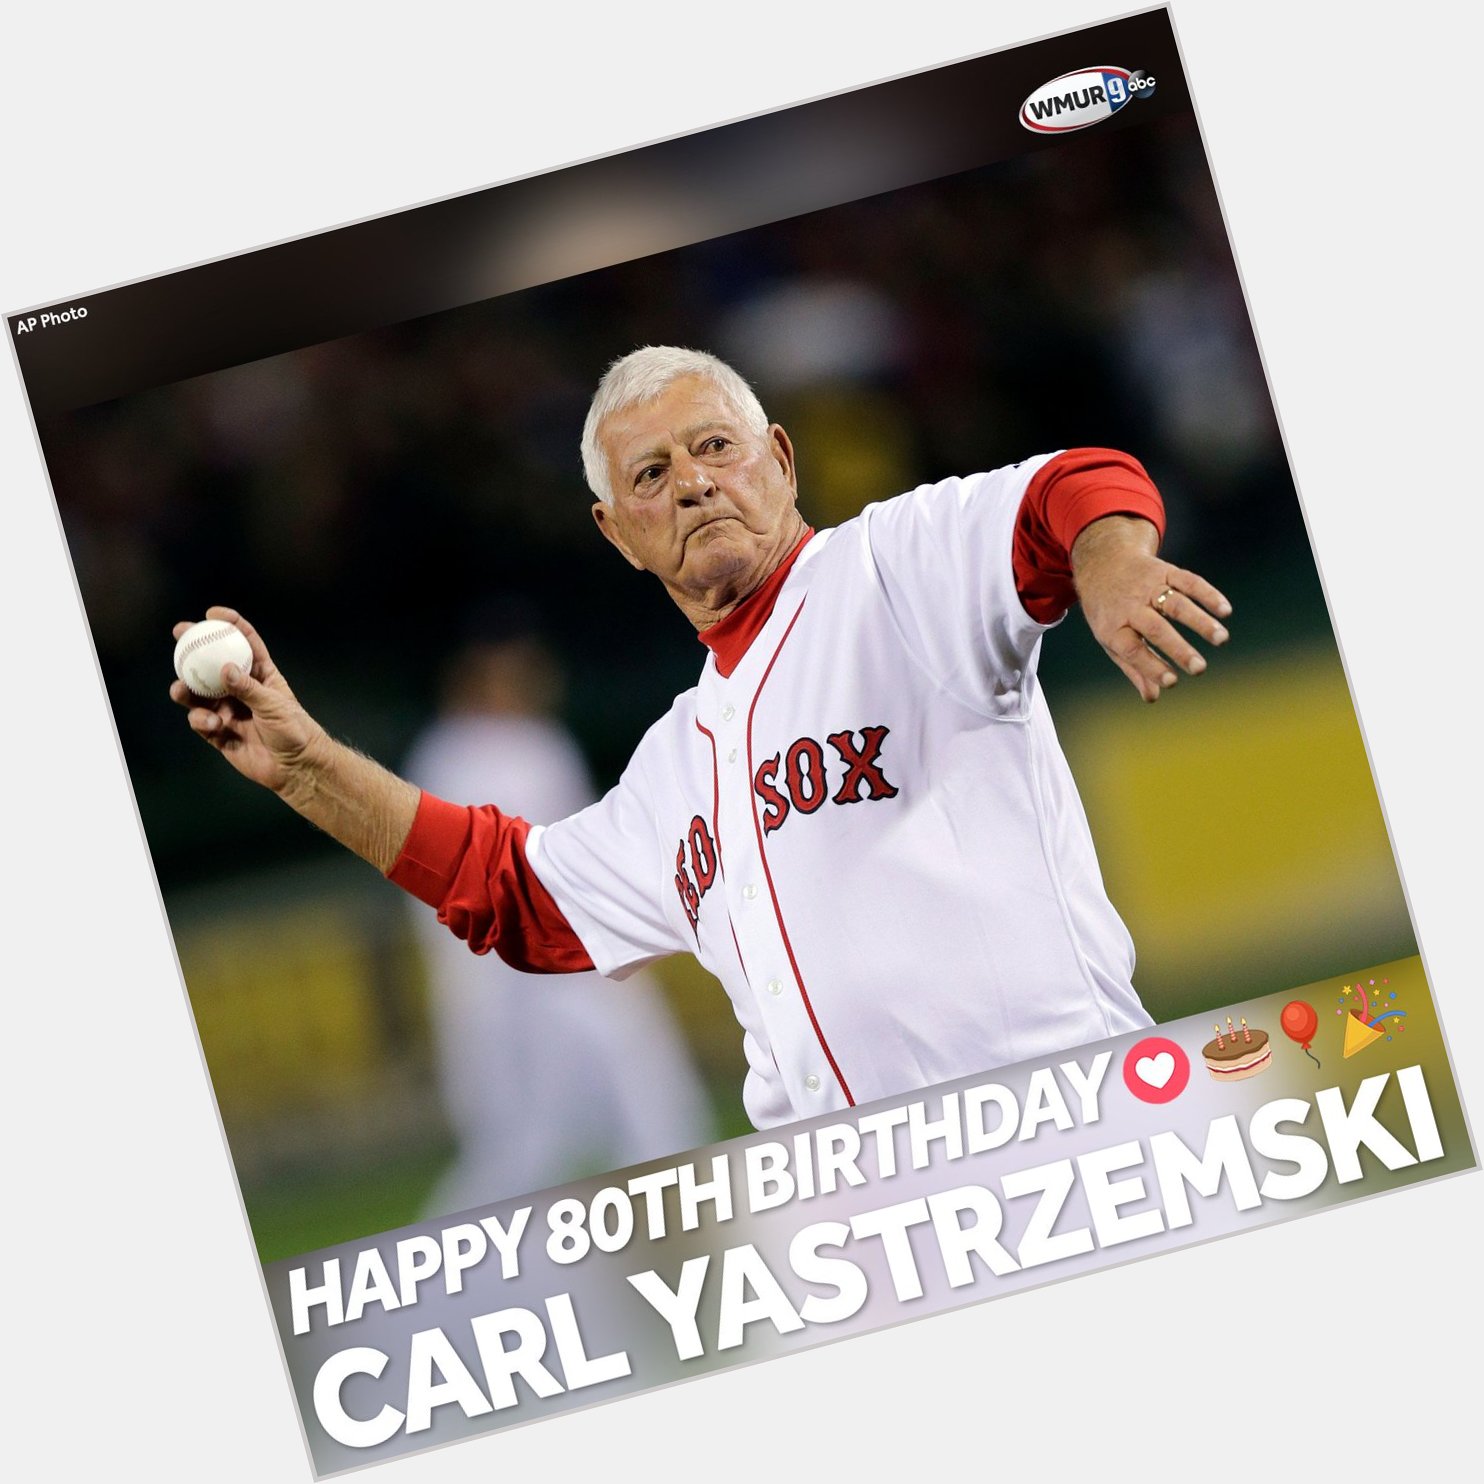 Wishing a happy 80th birthday to legend and Hall of Famer Carl Yastrzemski! 